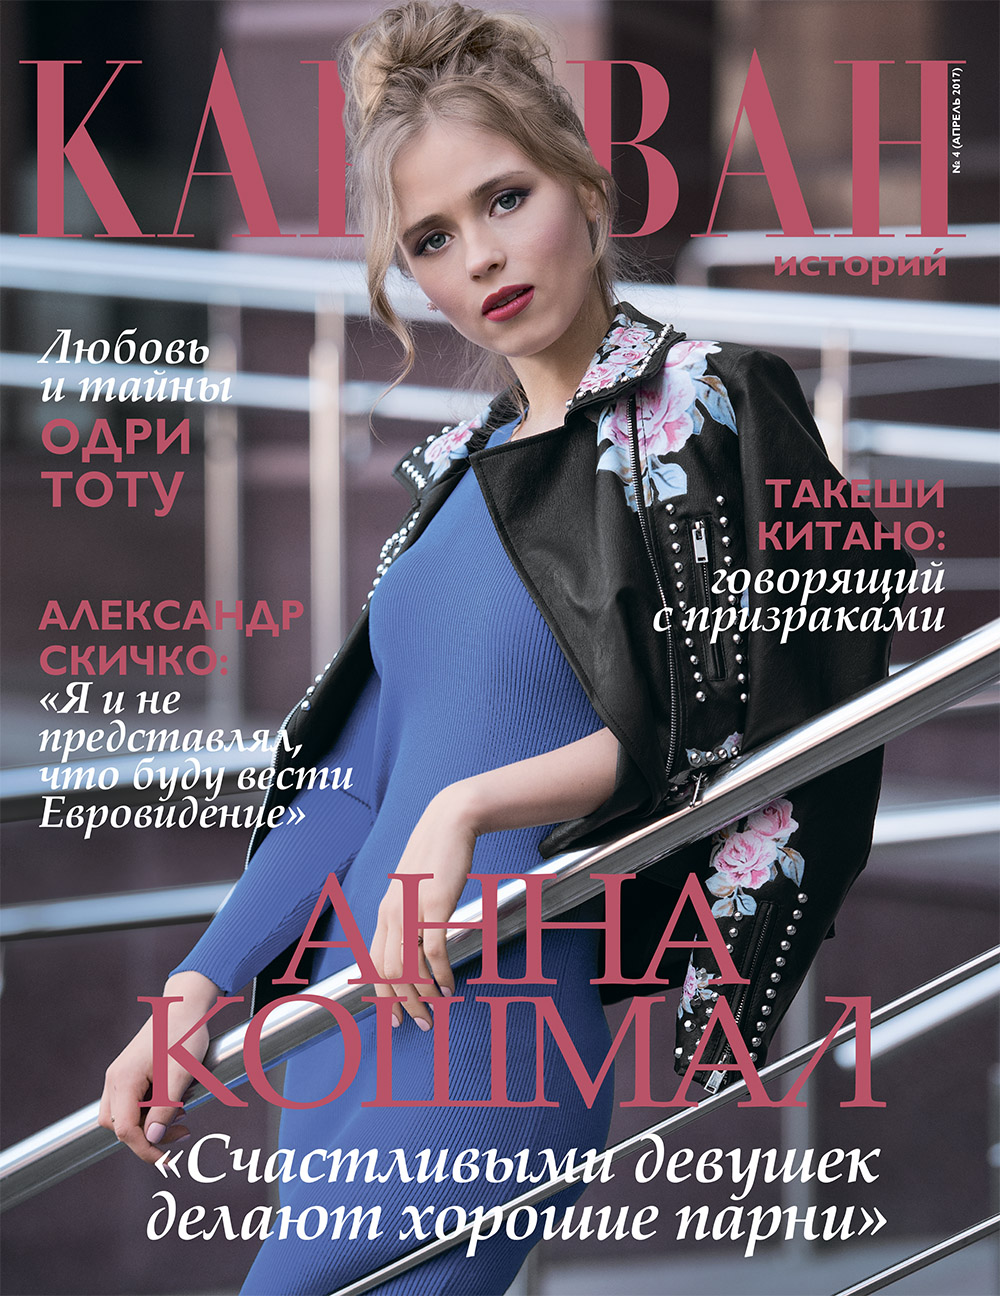 Анна Кошмал на обложке журнала "Караван историй", апрель 2017